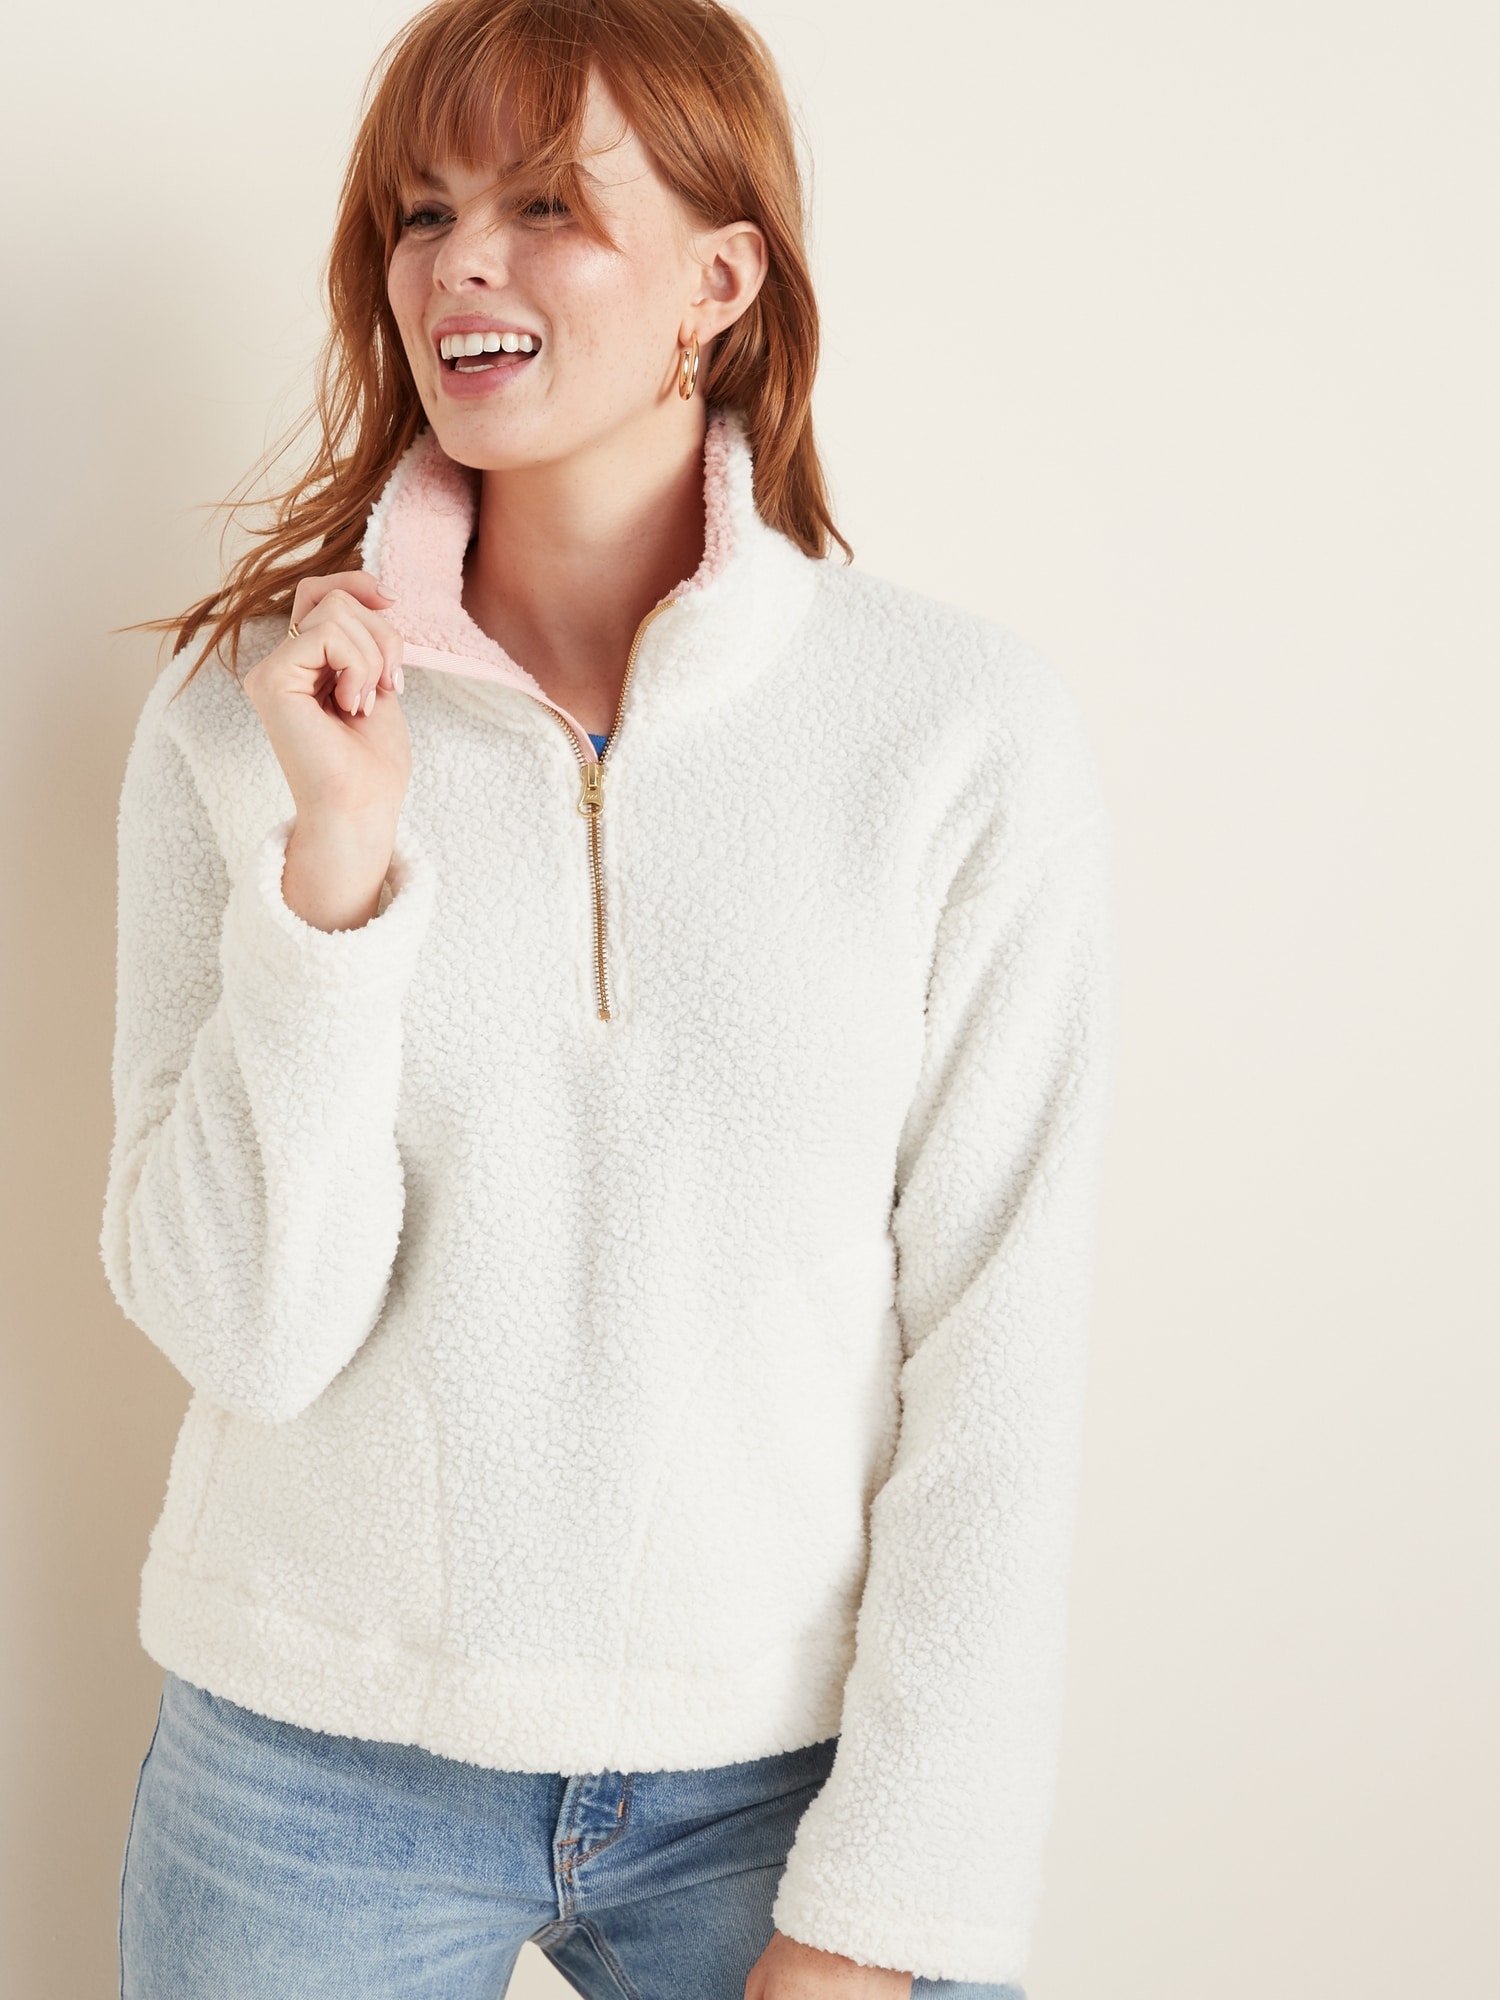 zipper sweater for ladies